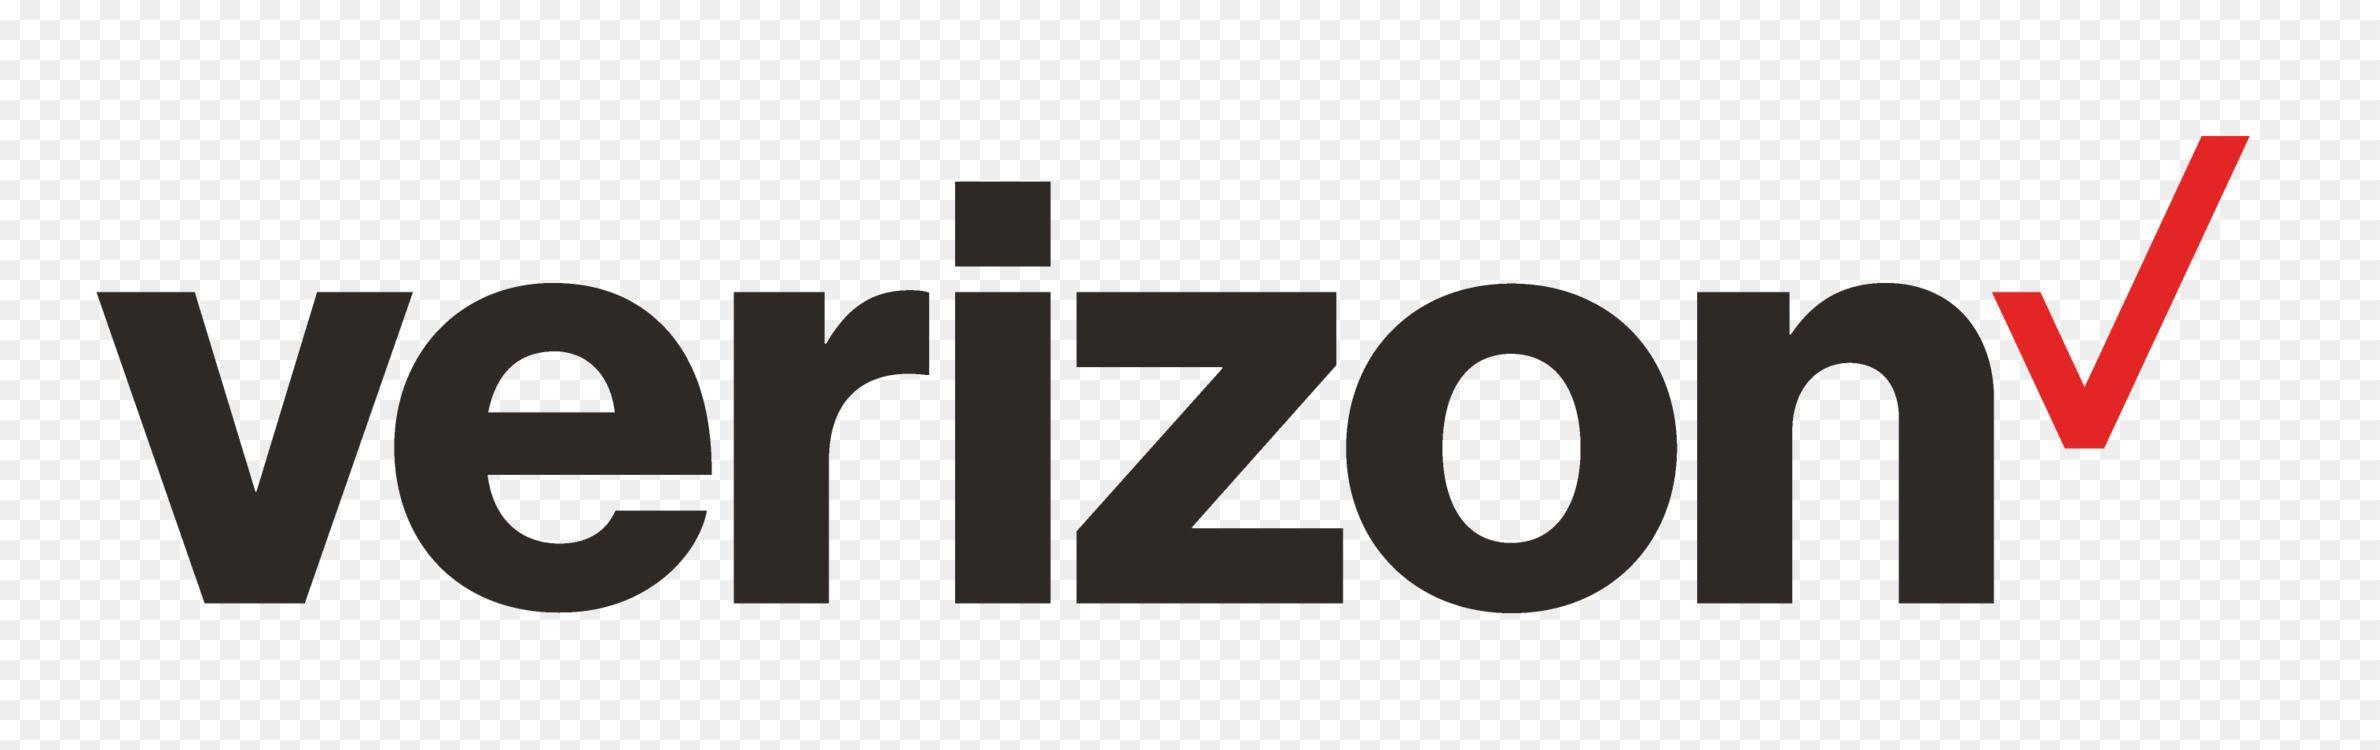 Verizon Wireless Logo - Verizon Wireless Store Mobile Phones 5G Free PNG Image - Verizon ...